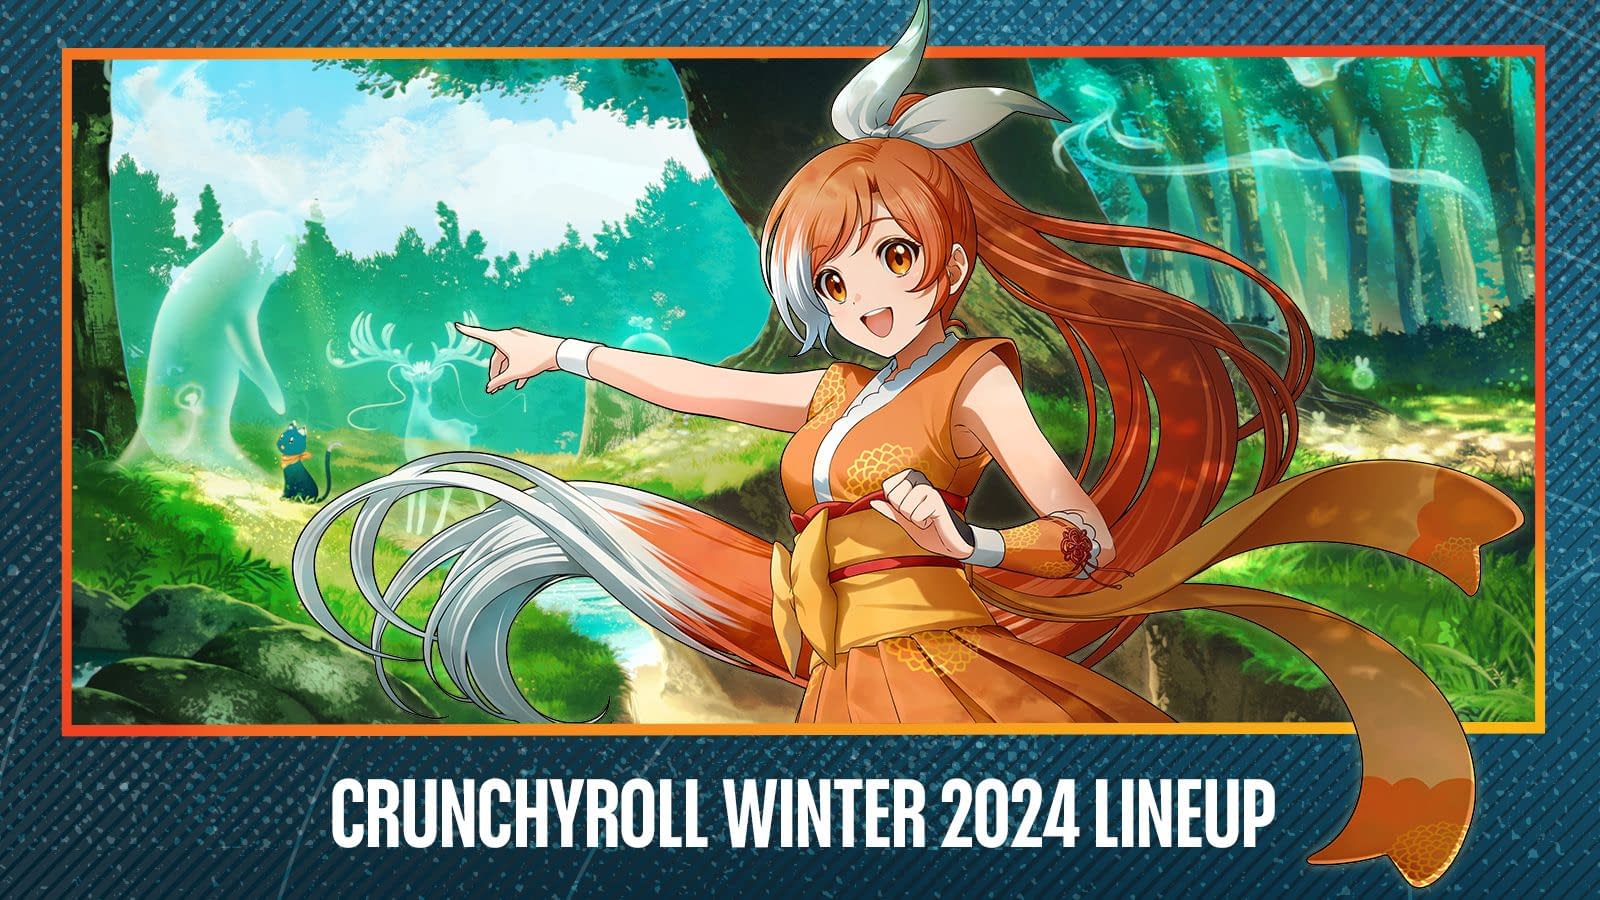 Crunchyroll Lineup Winter 2024 The Ultimate Anime Season!